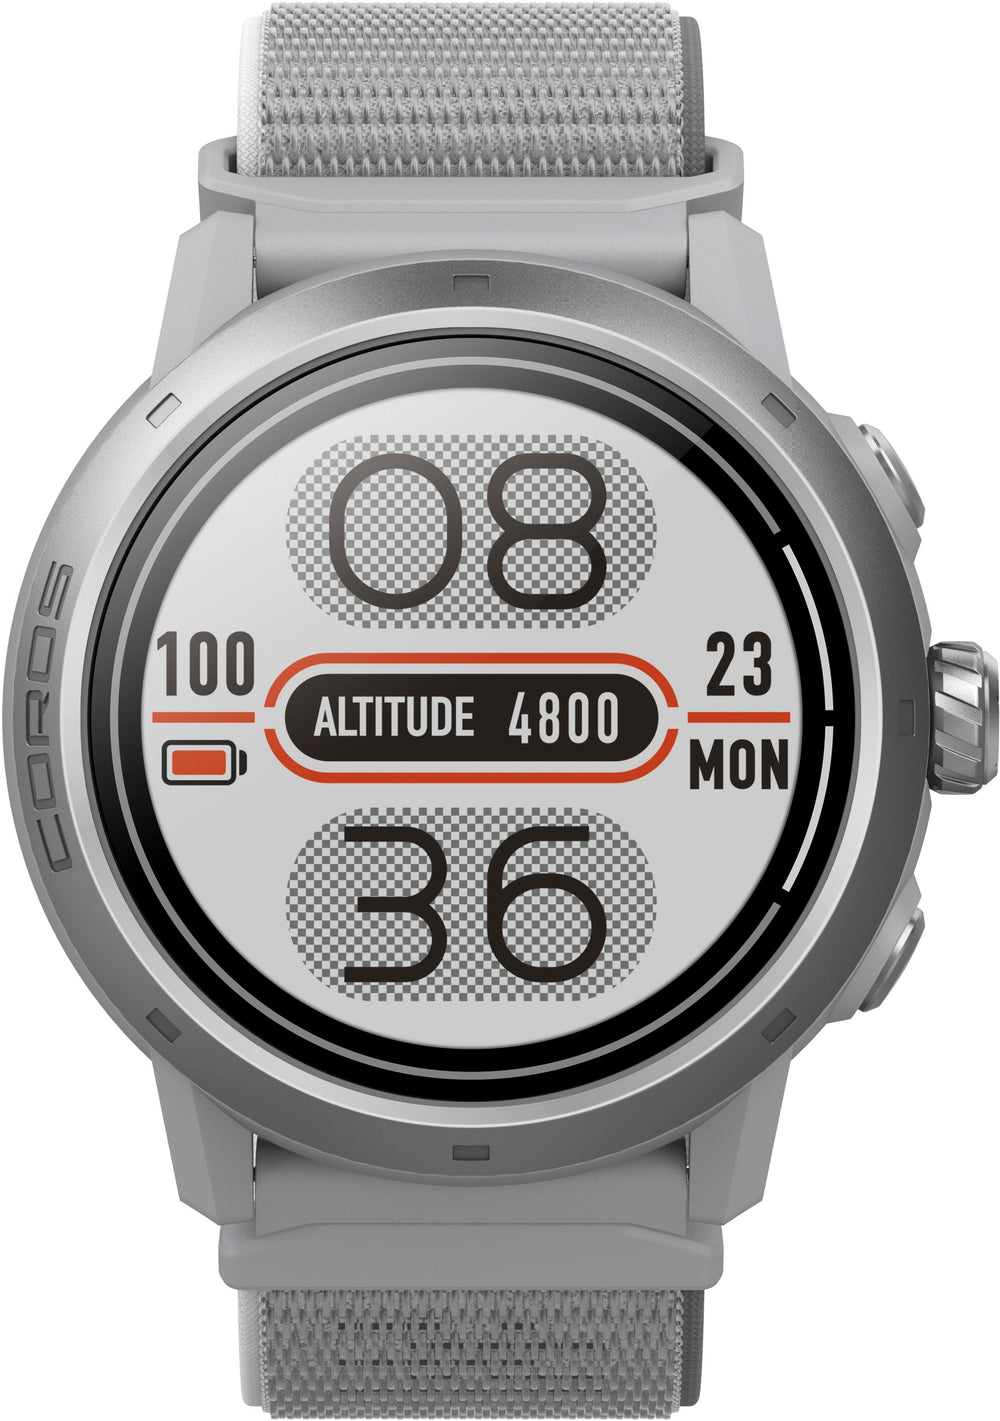 COROS - APEX 2 Pro GPS Outdoor Watch - Gray_1